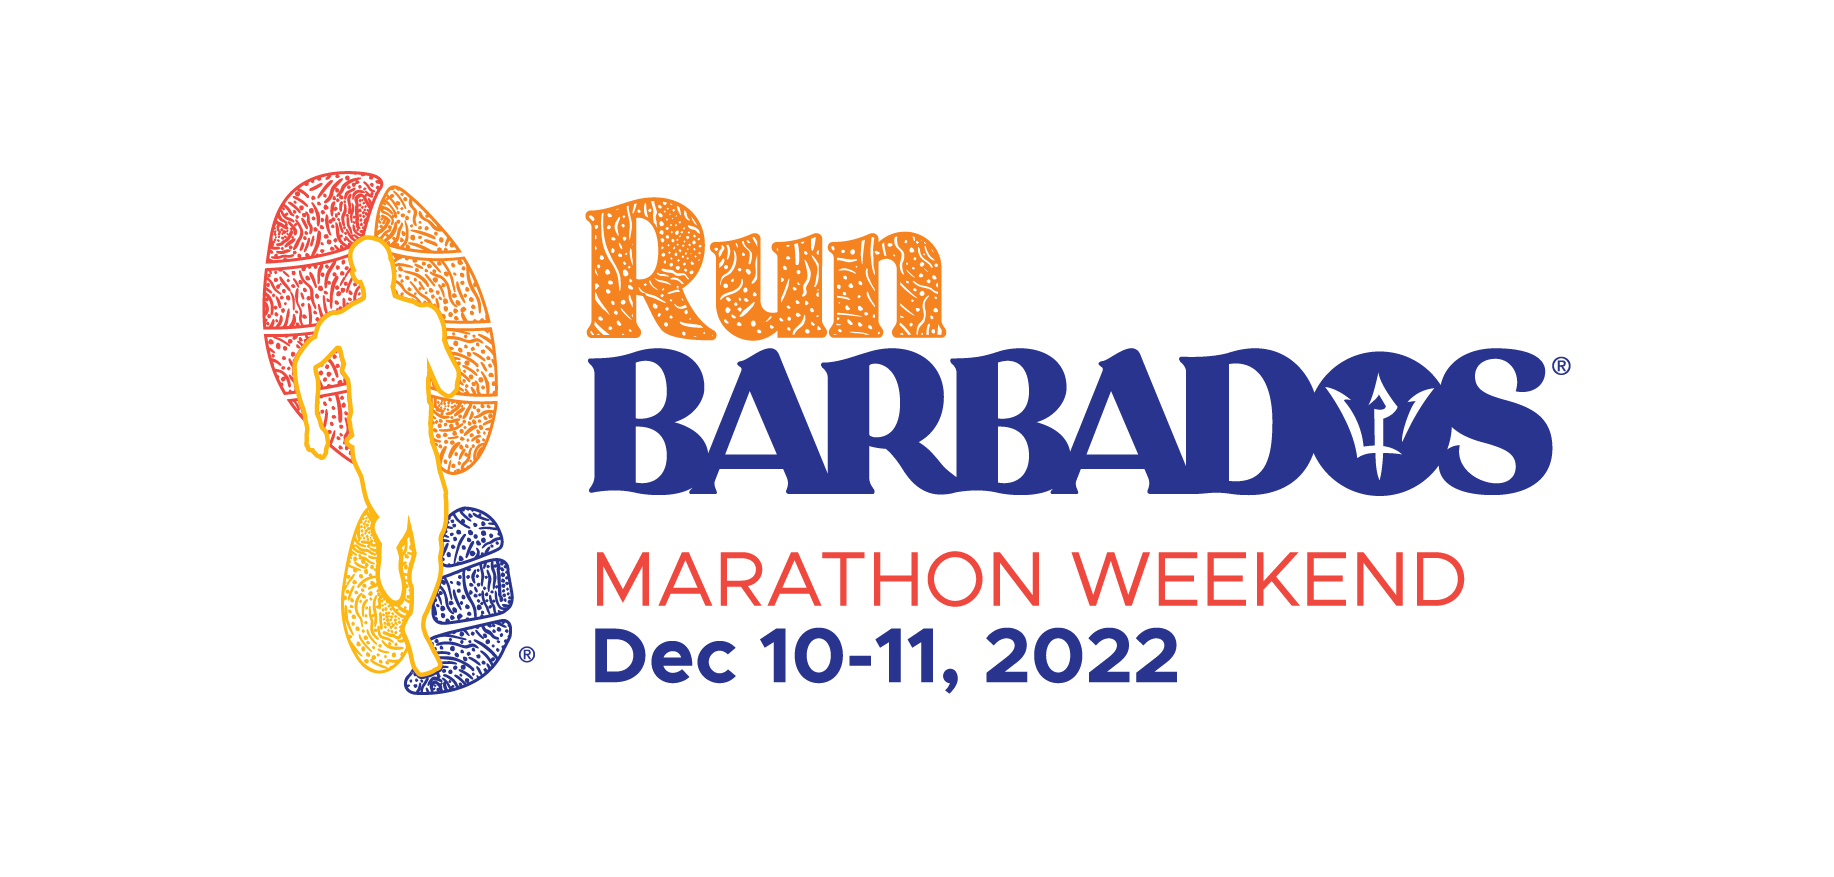 Corra Barbados - Maratona de fim de semana